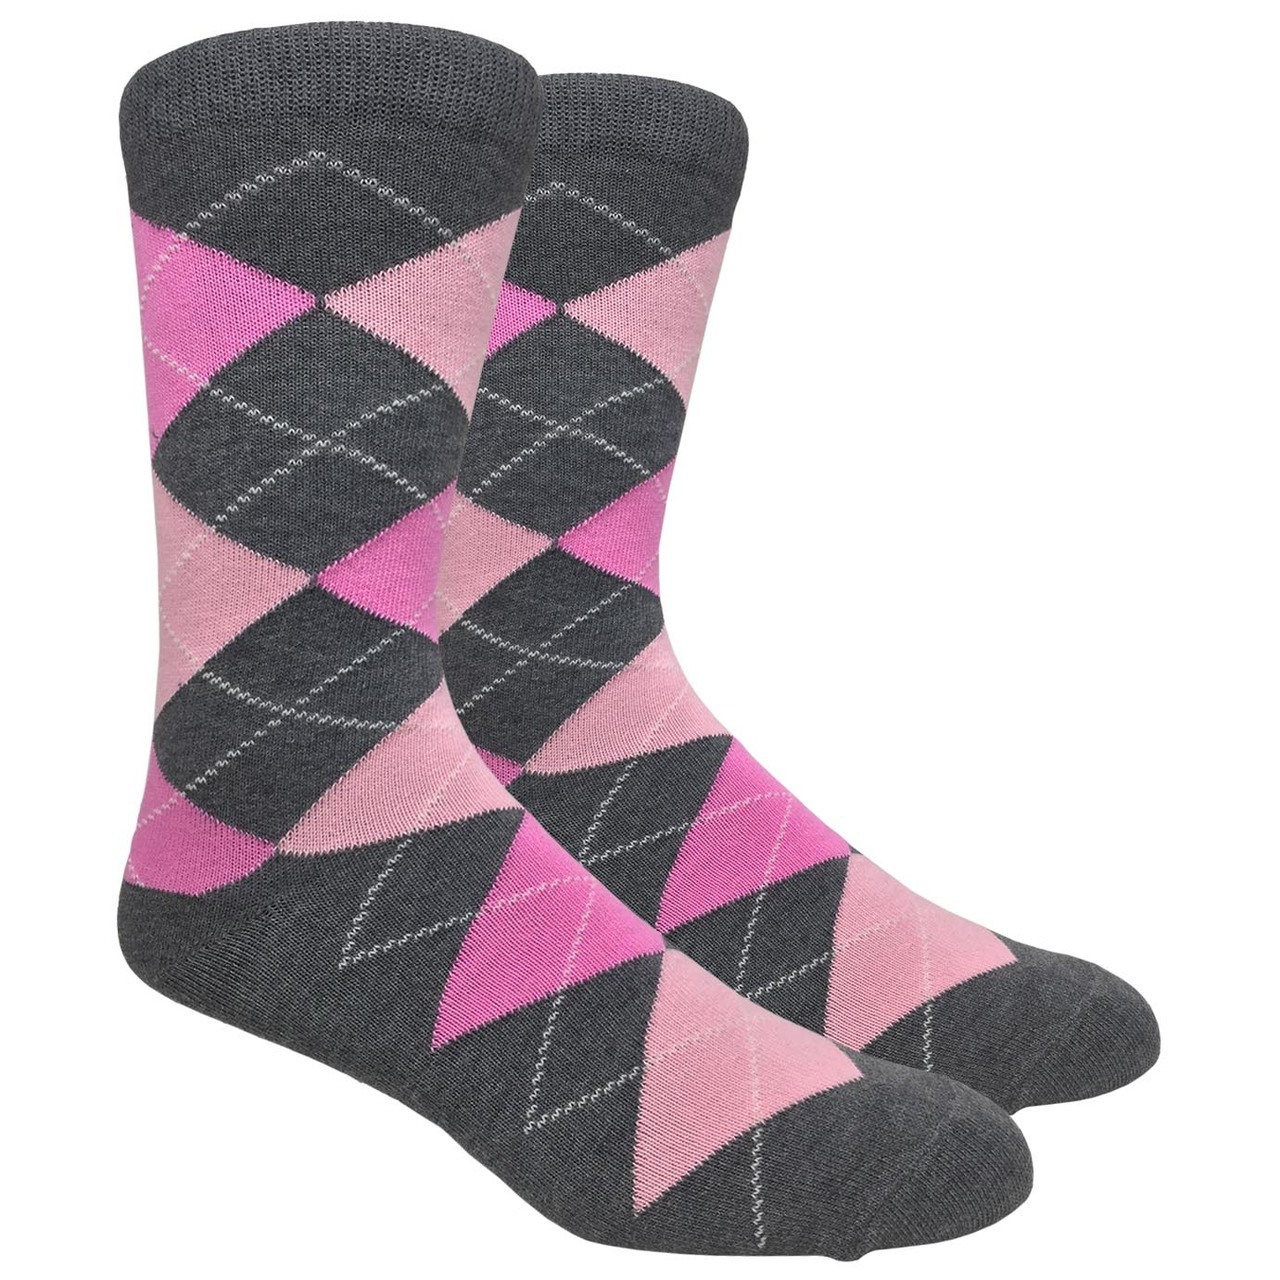 Big Tall Argyle Socks for Men 3 pack 13-15 - image 4 of 4